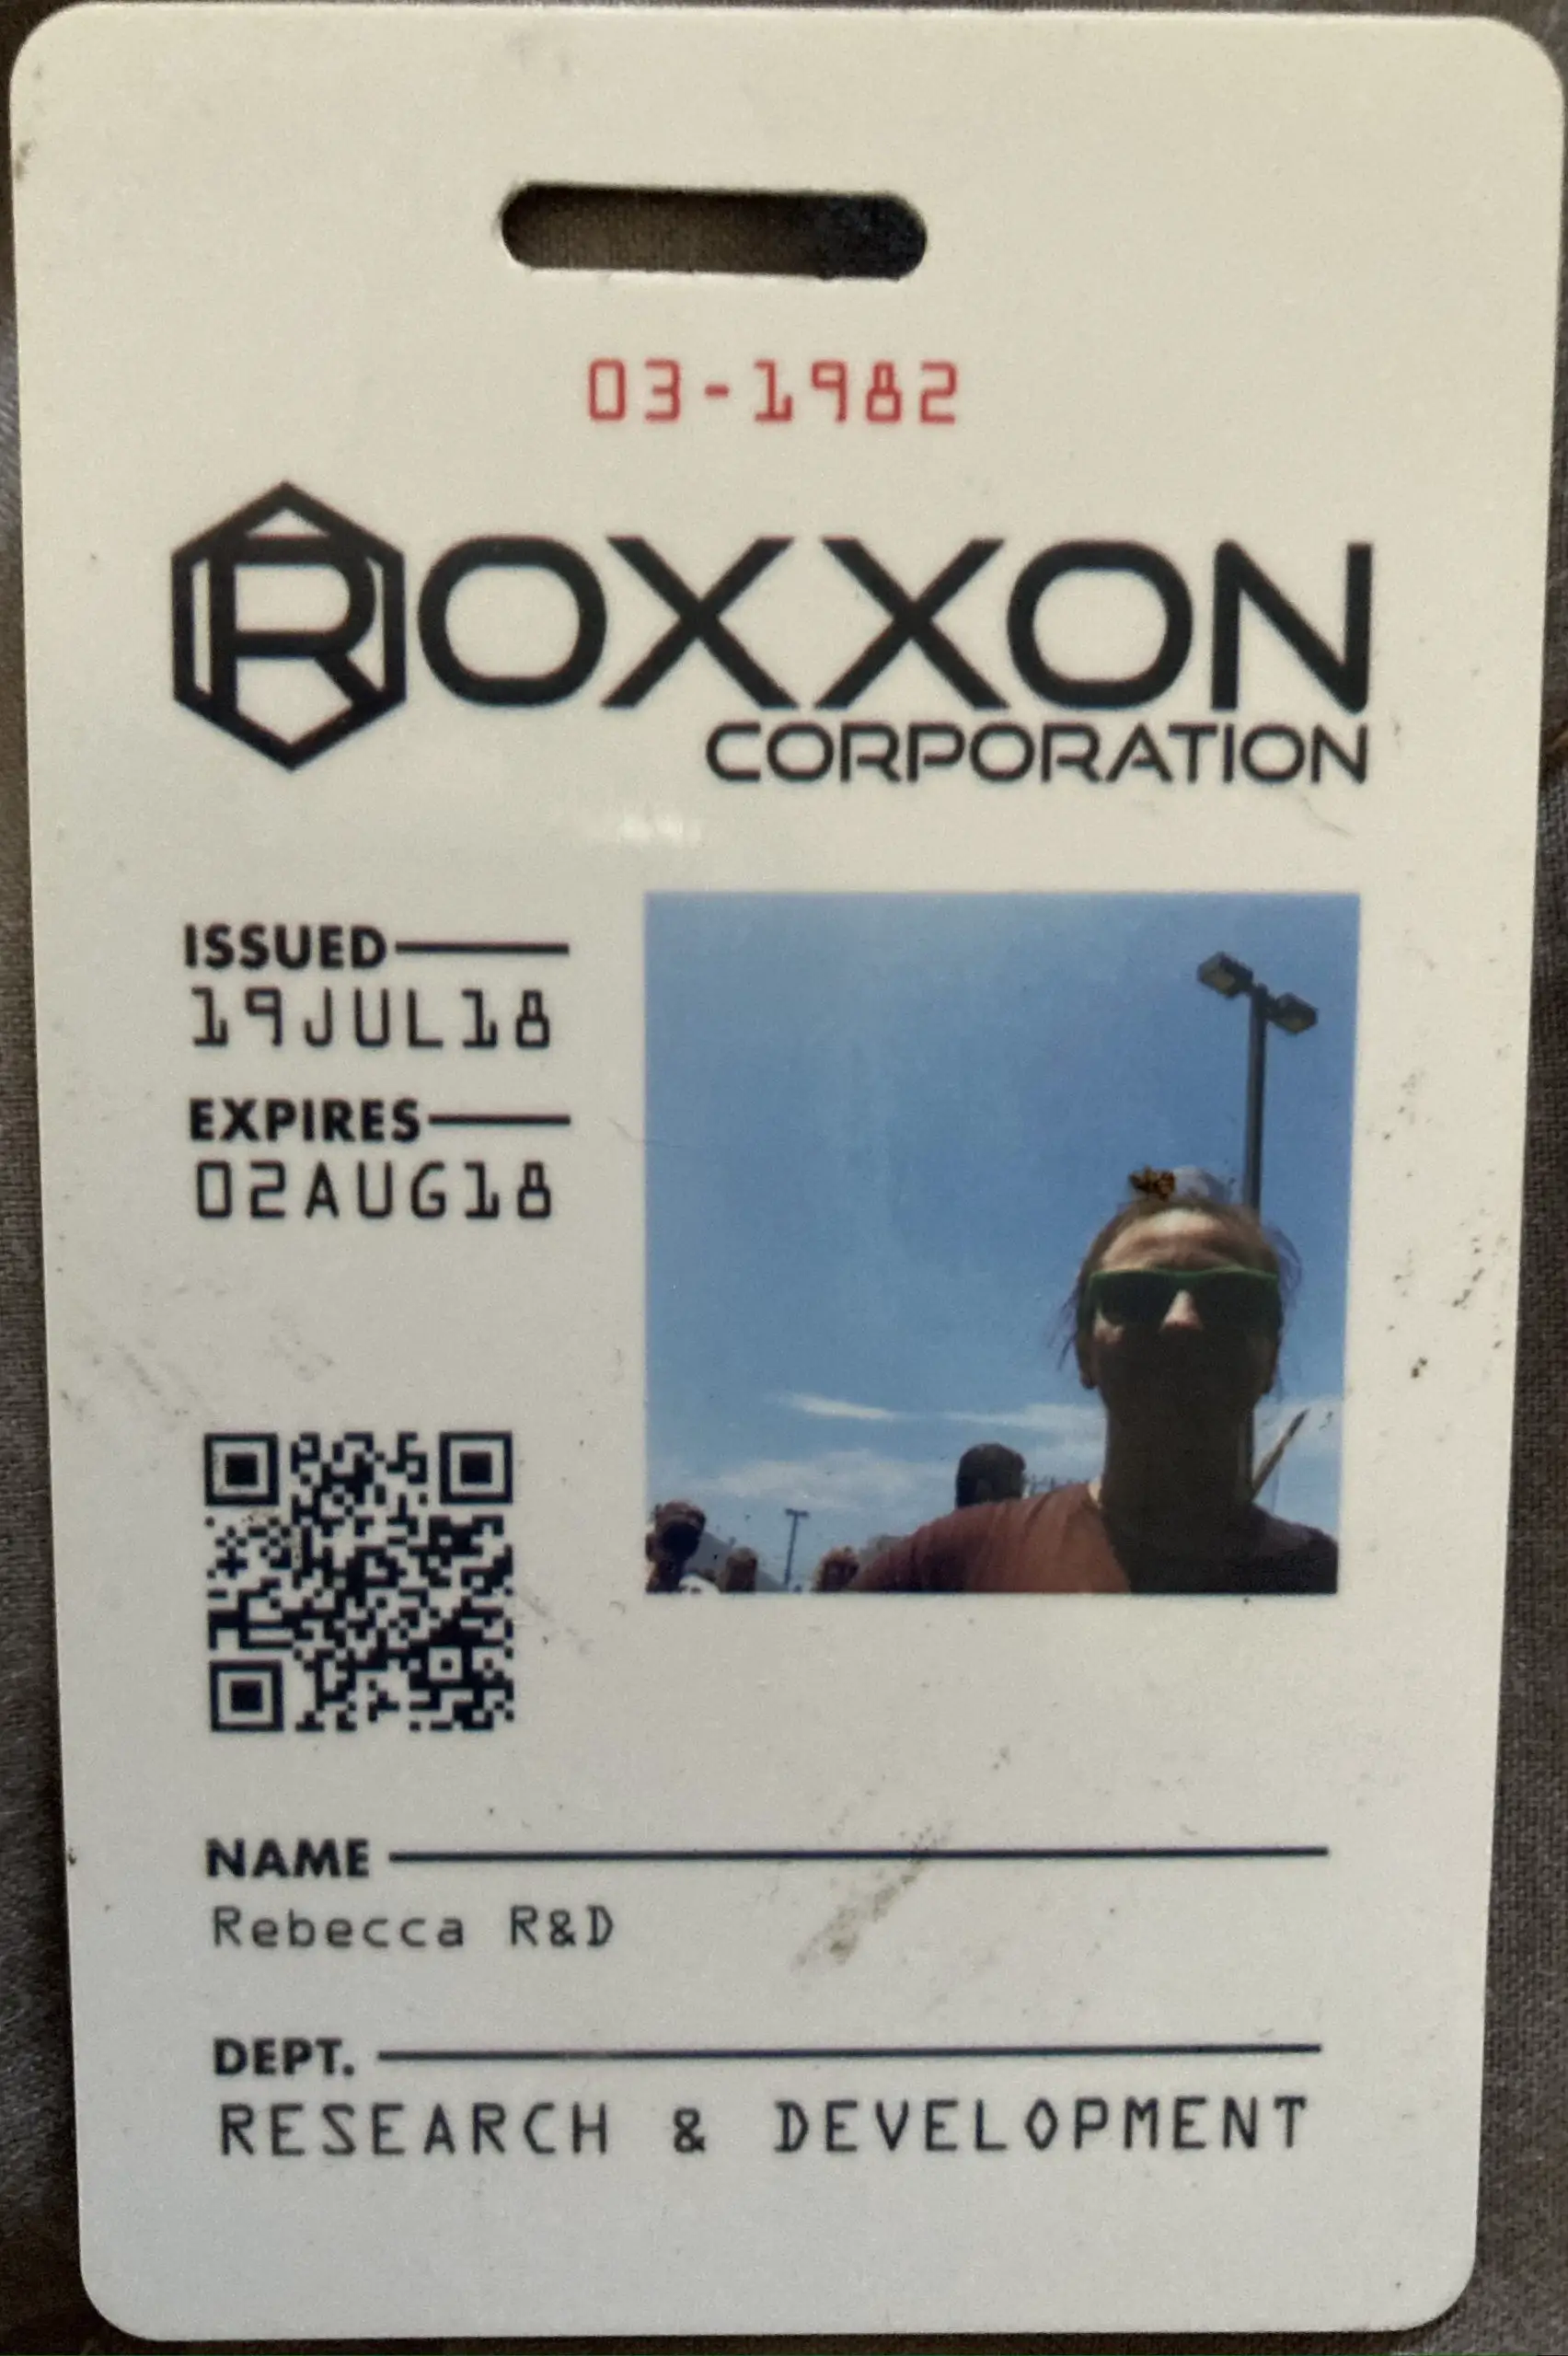 ROXXON Corporation badge from SDCC18